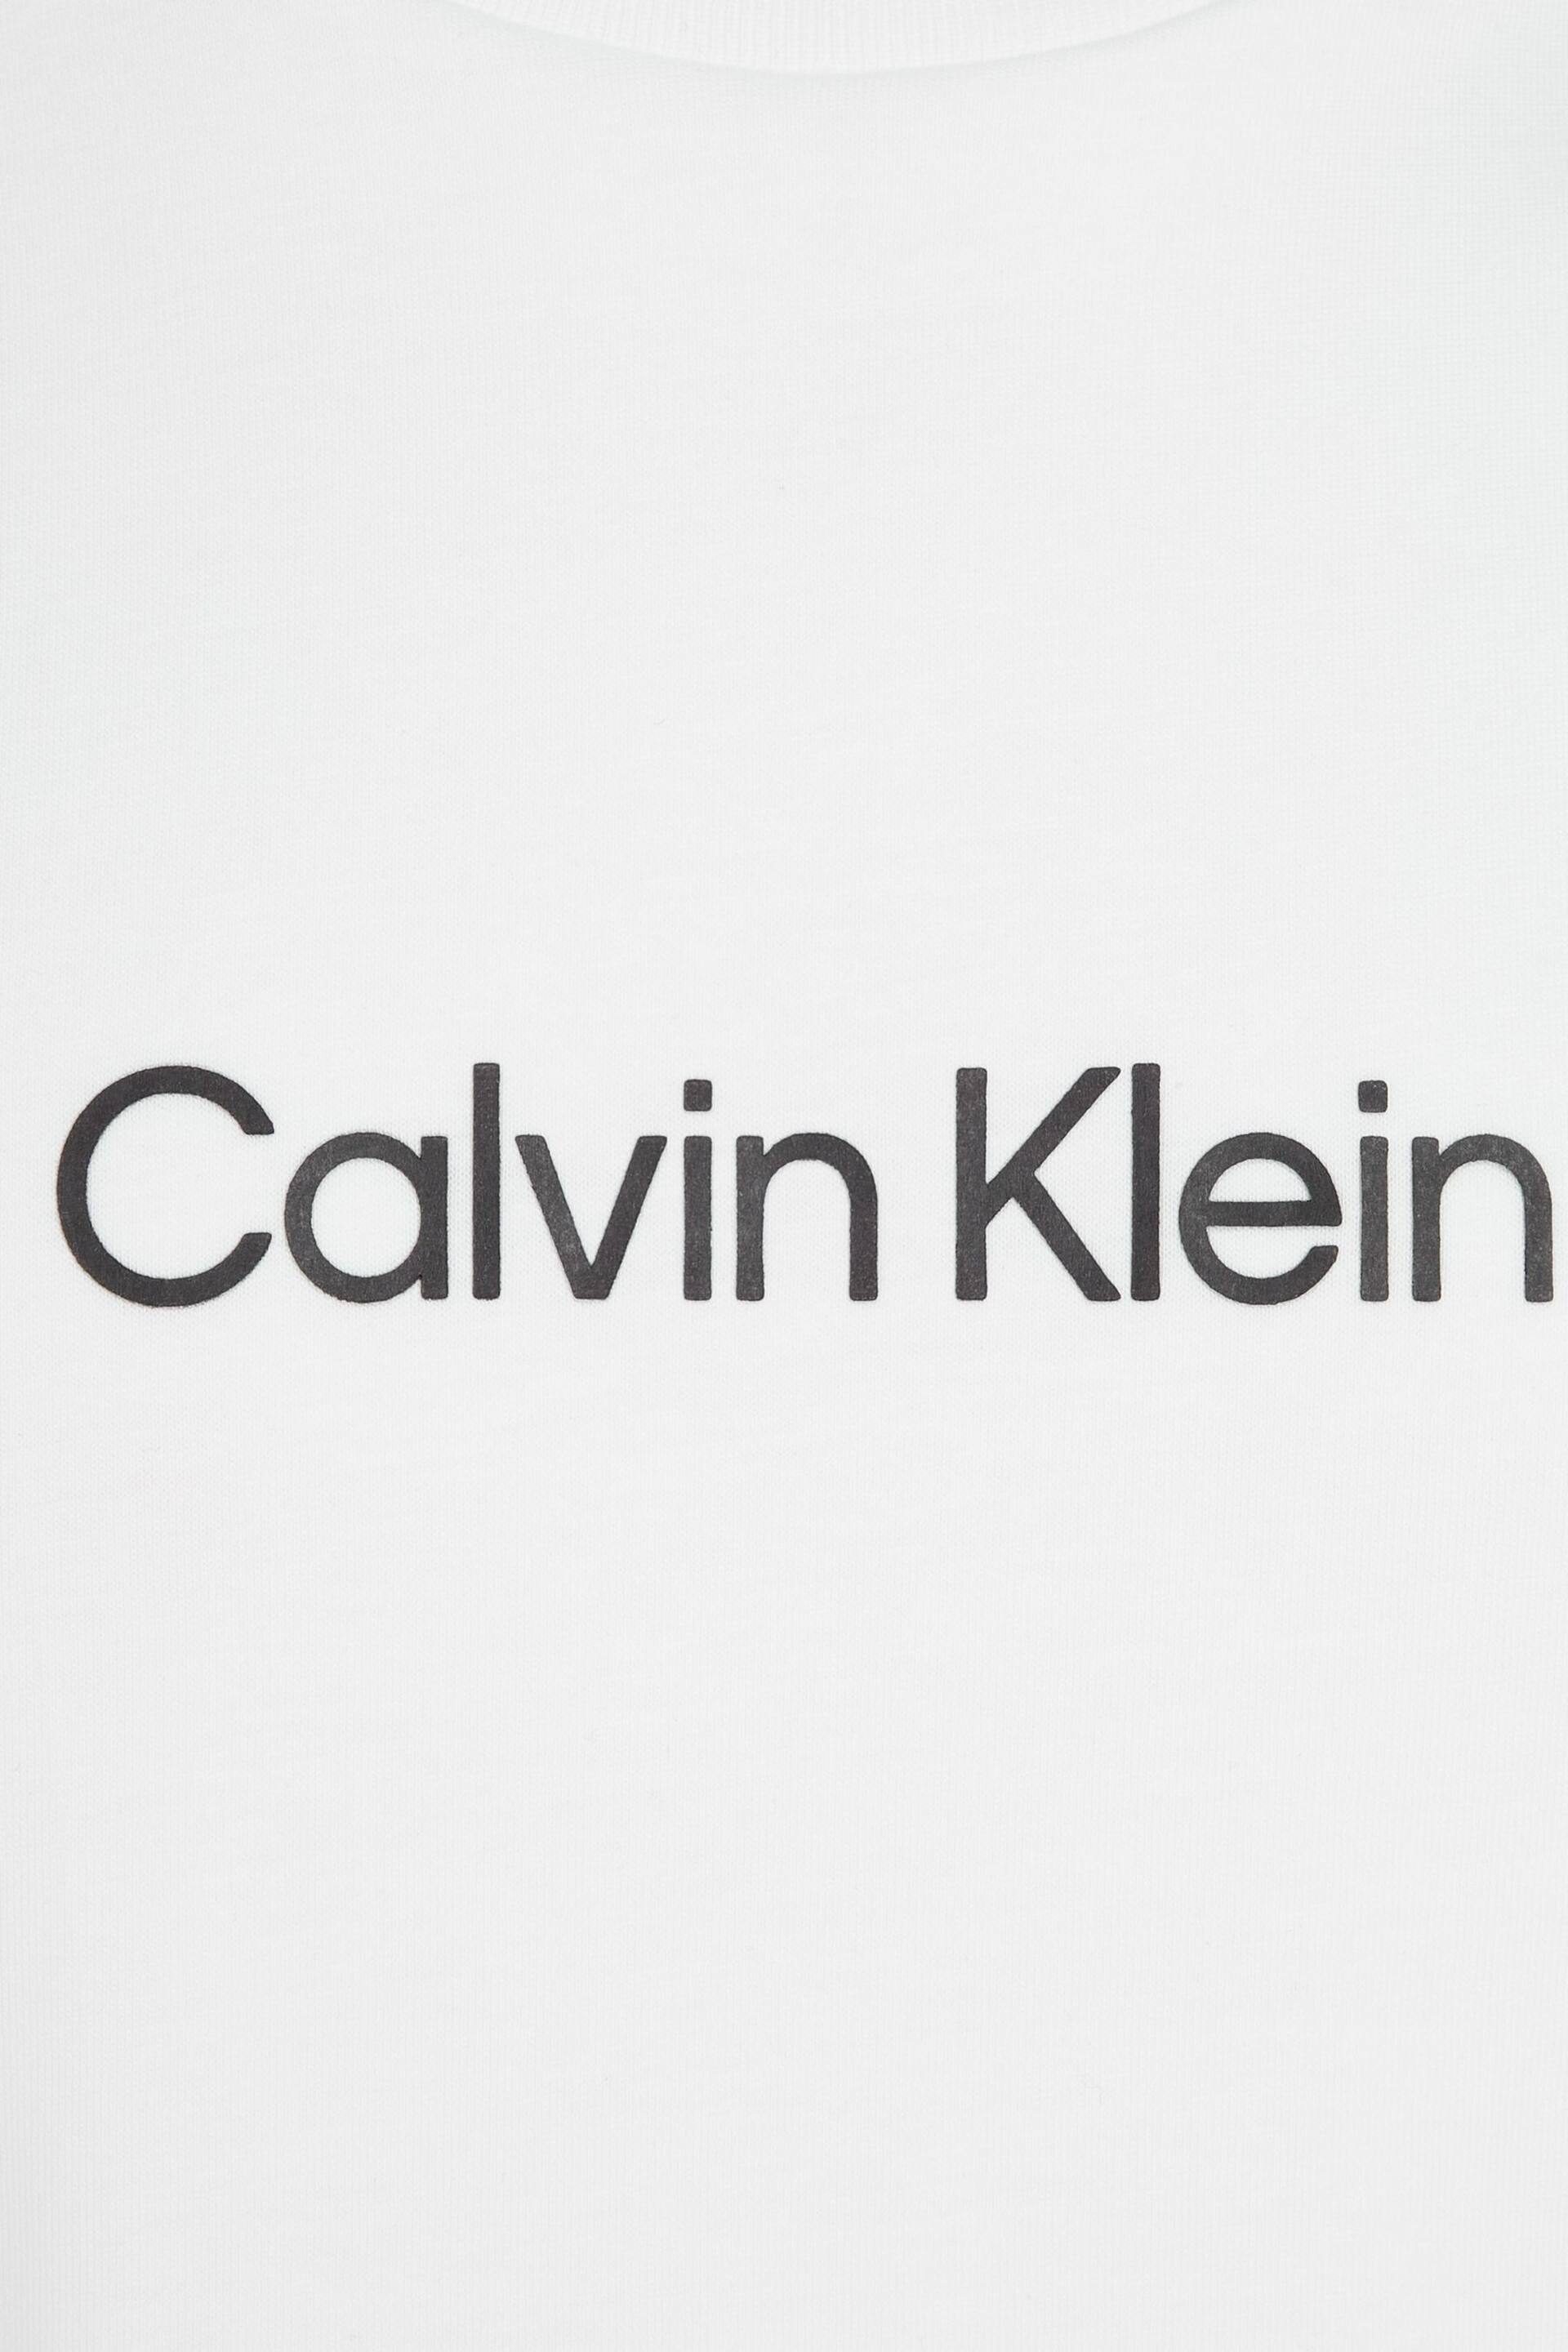 Calvin Klein White Slim Fit Logo Comfort T-Shirt - Image 6 of 6